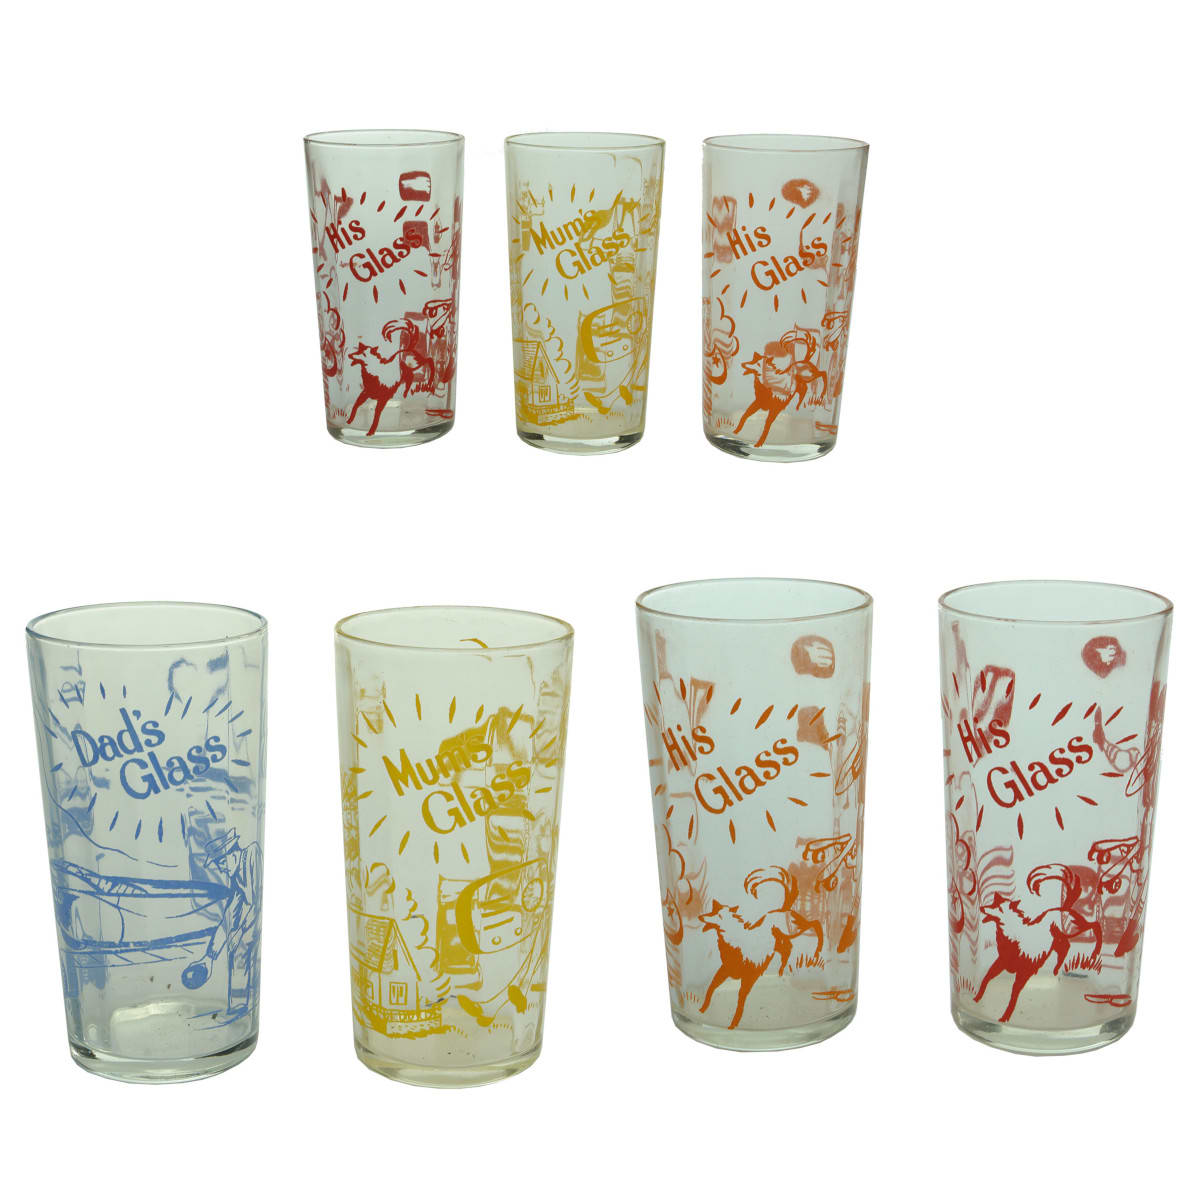 7 Ceramic label decorated glasses: 4 x His Glass (Red & Orange); 2 x Mum's Glass (Yellow); 1 x Dad's Glass (Blue).